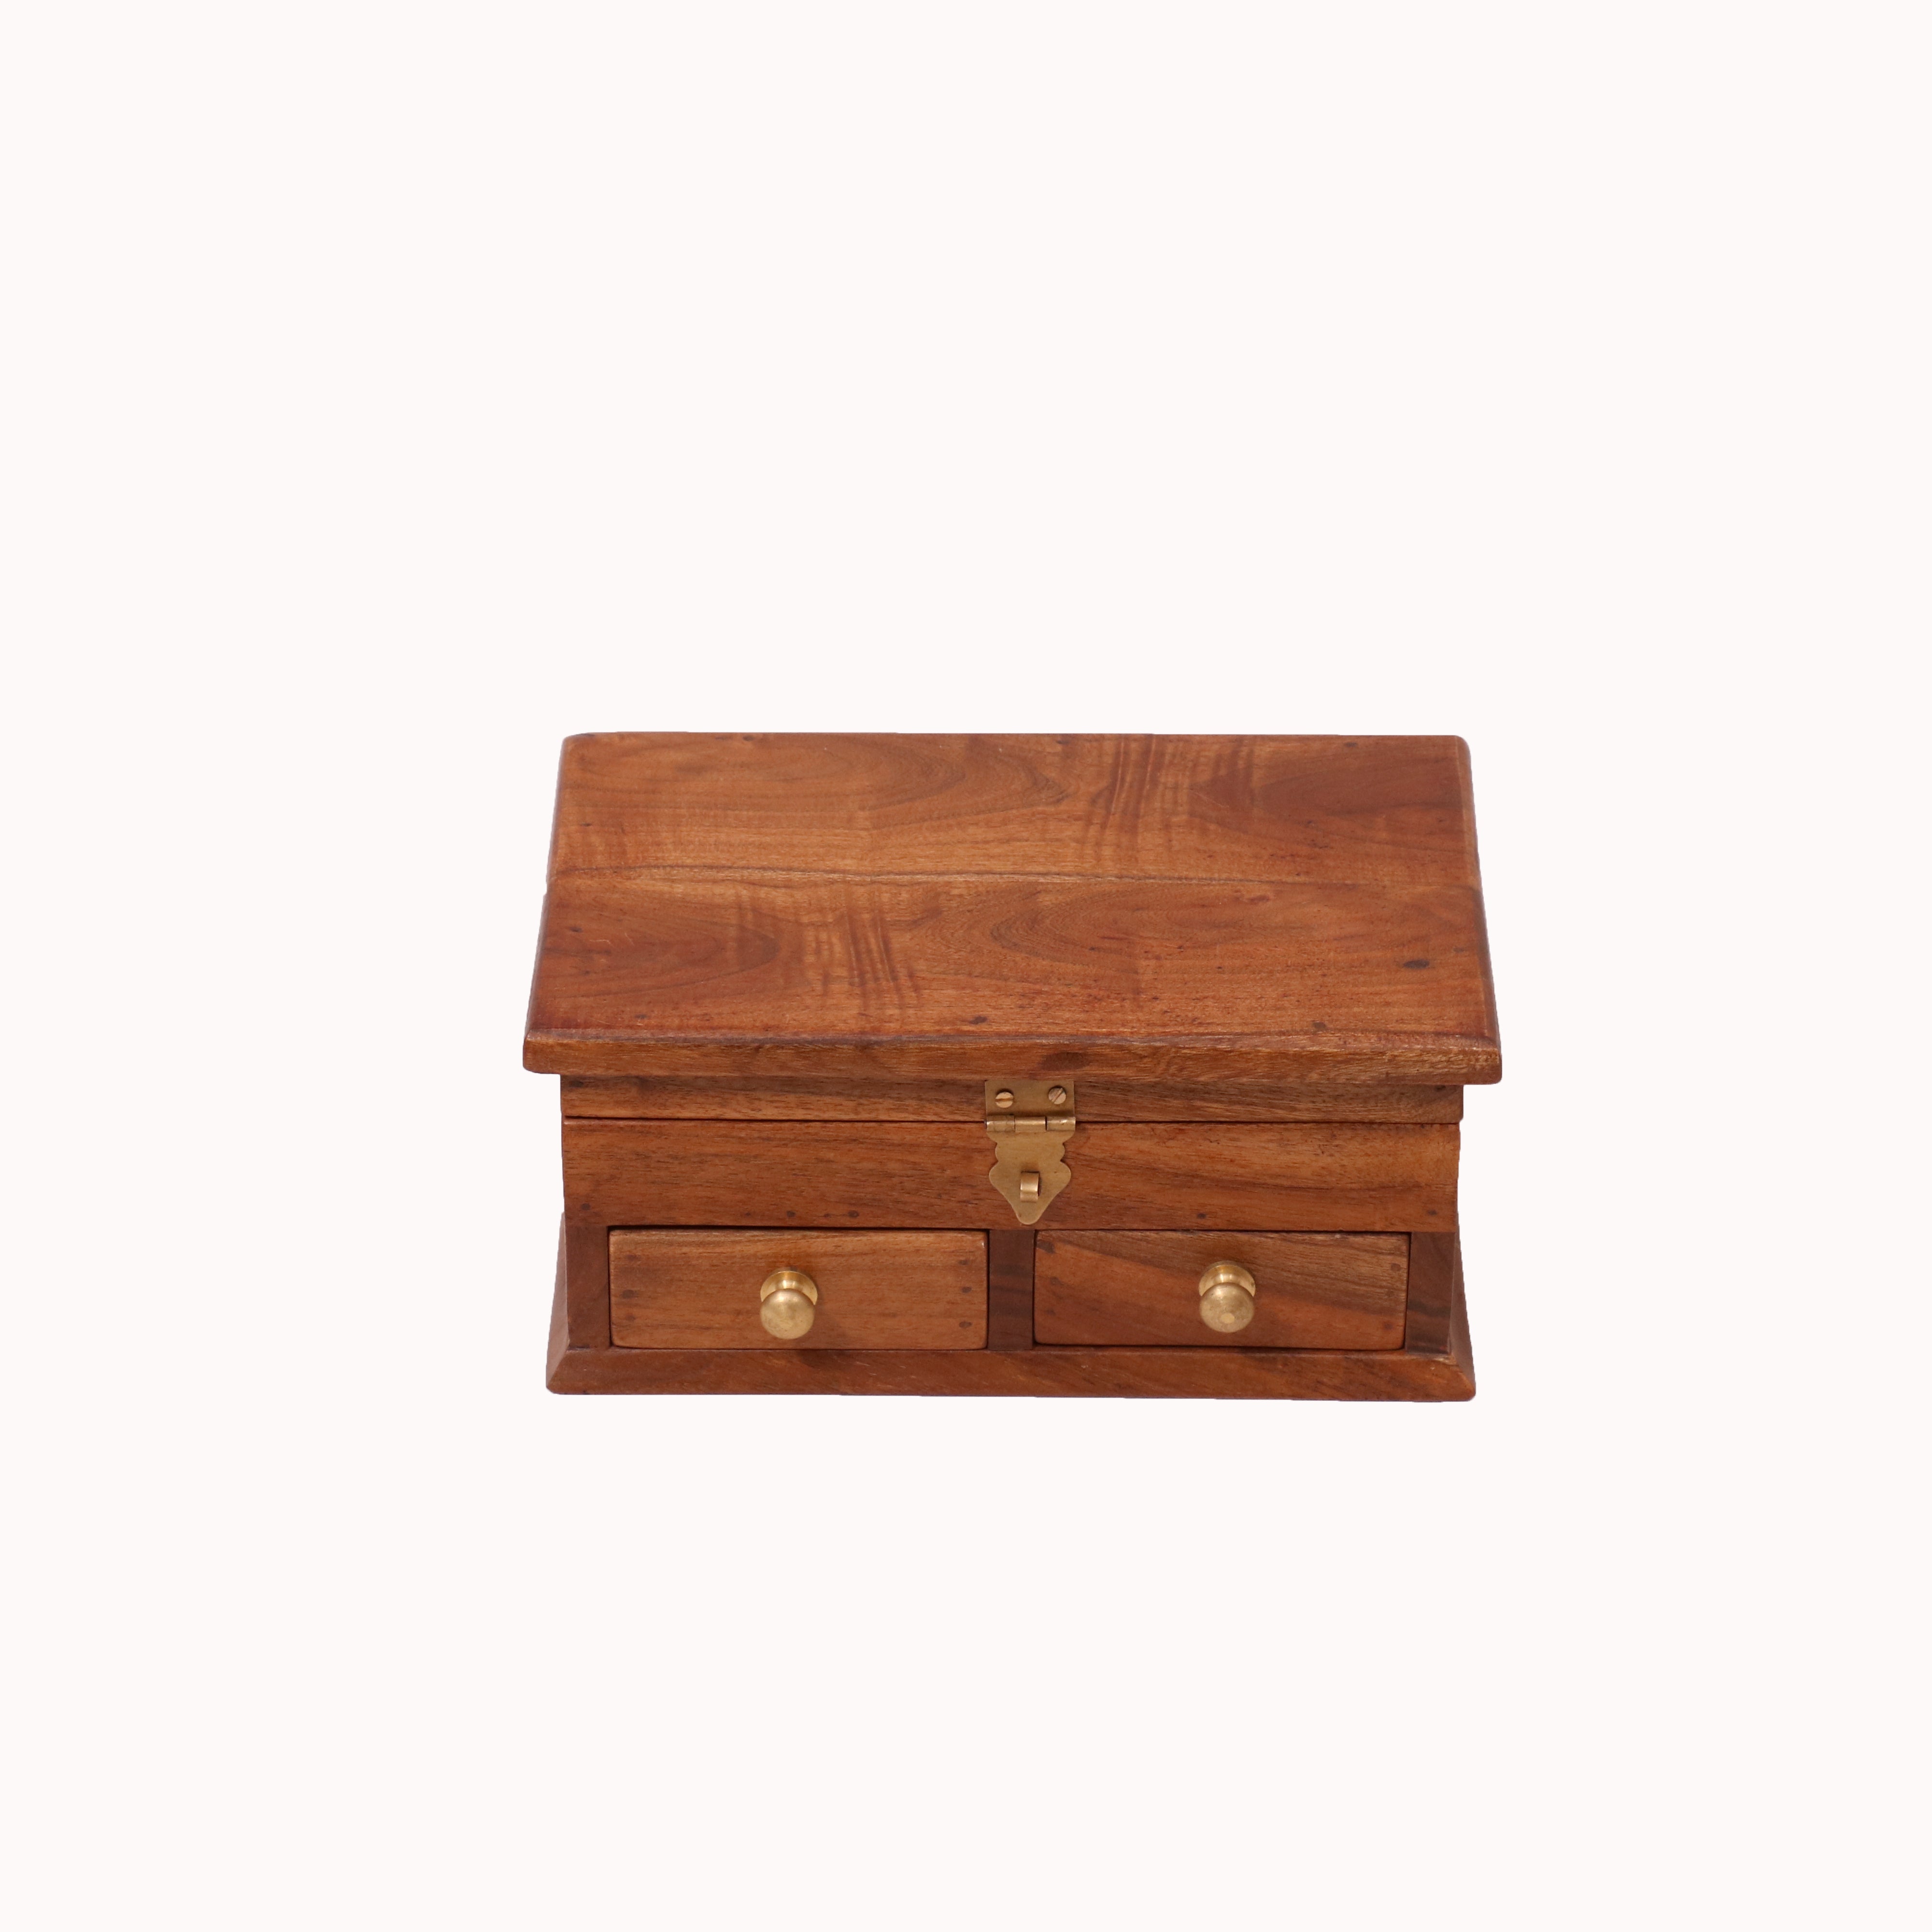 Old School Jewellery Box Wooden Box